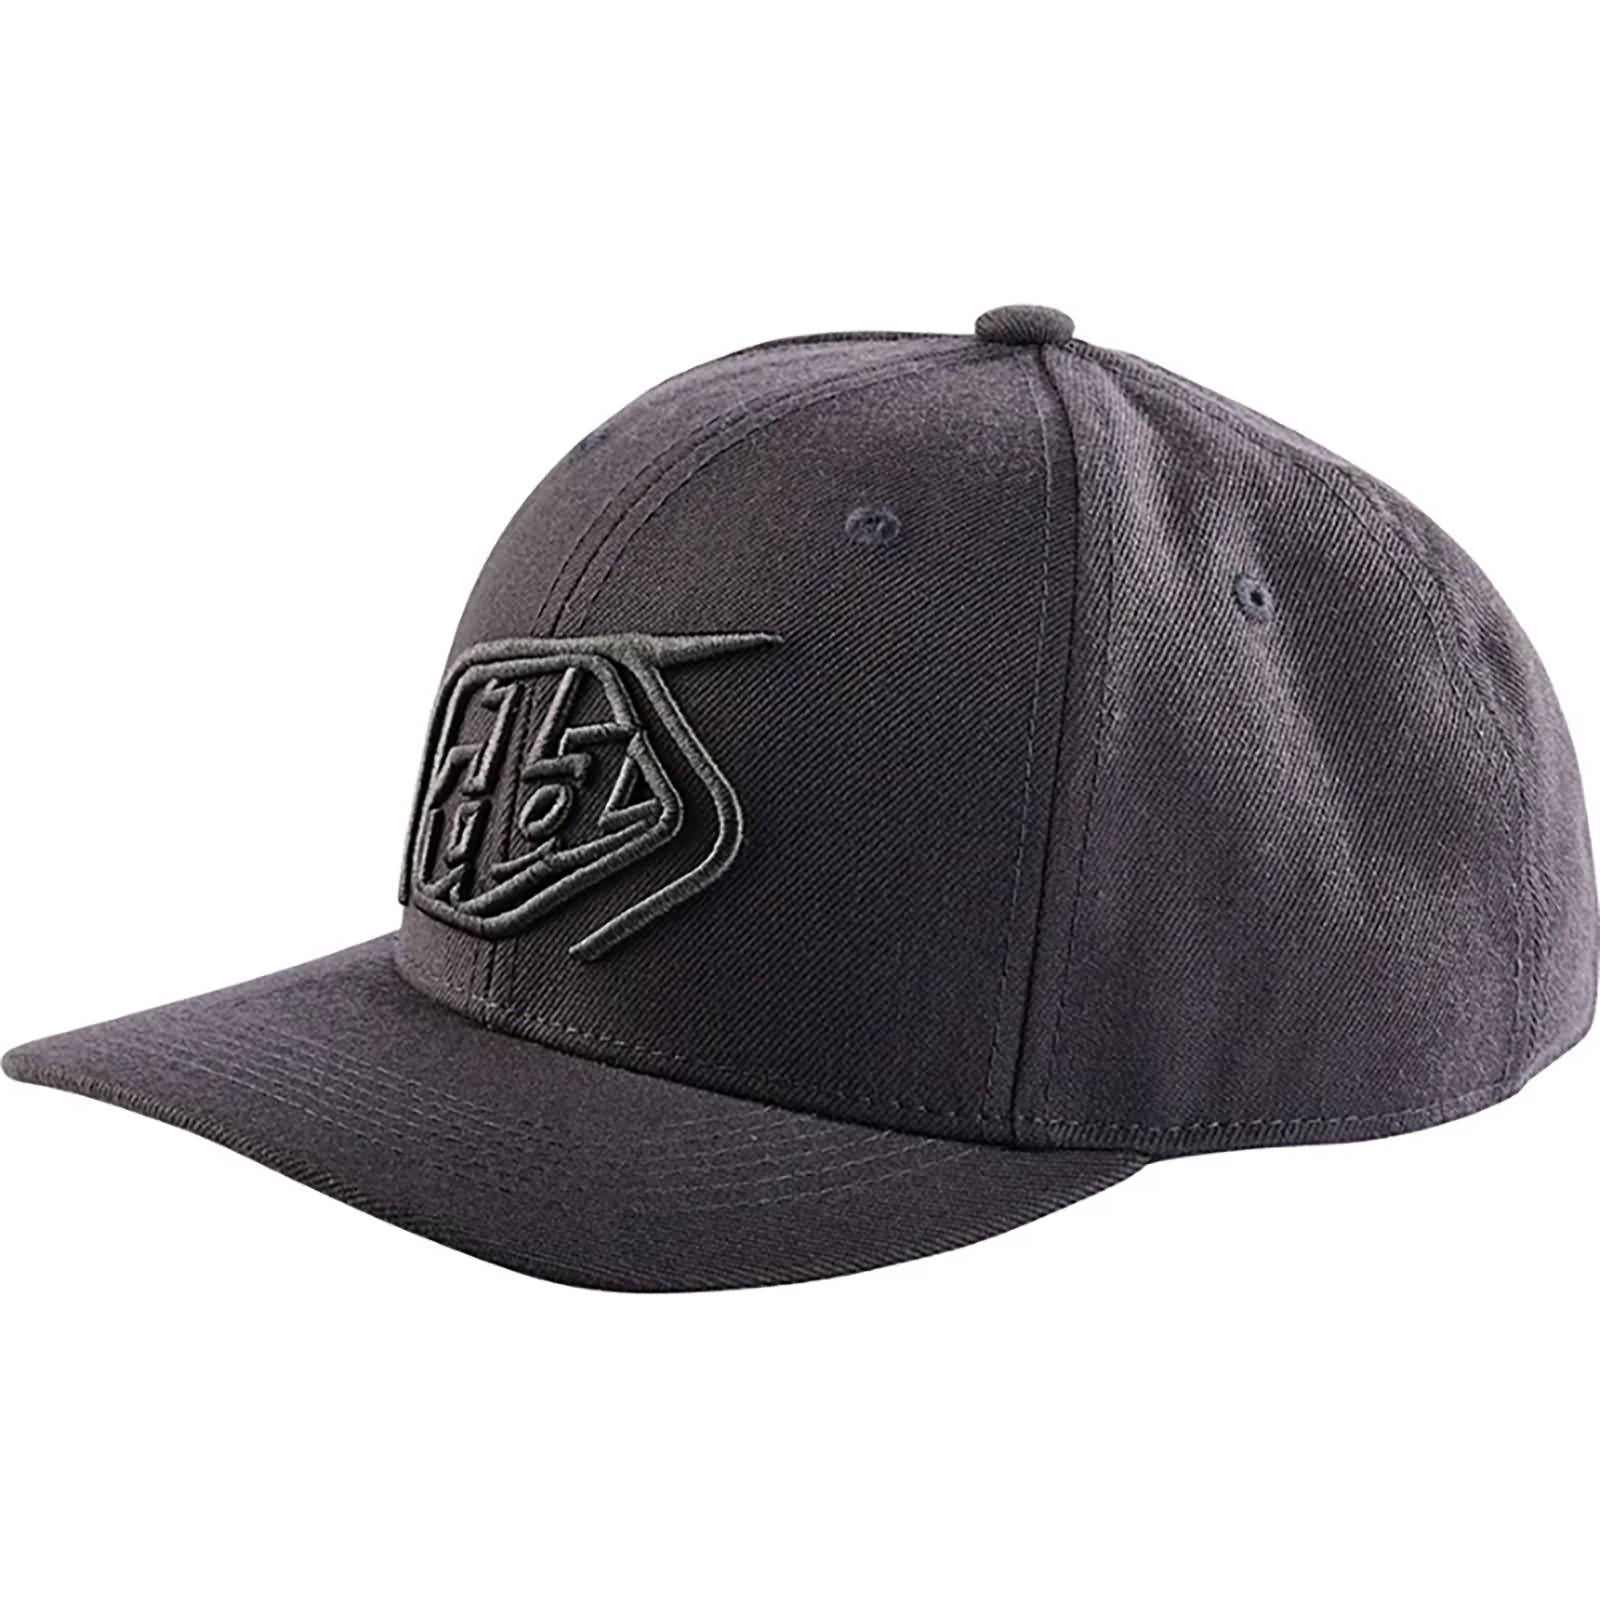 Troy Lee Designs Crop Men's Snapback Adjustable Hats-766570020